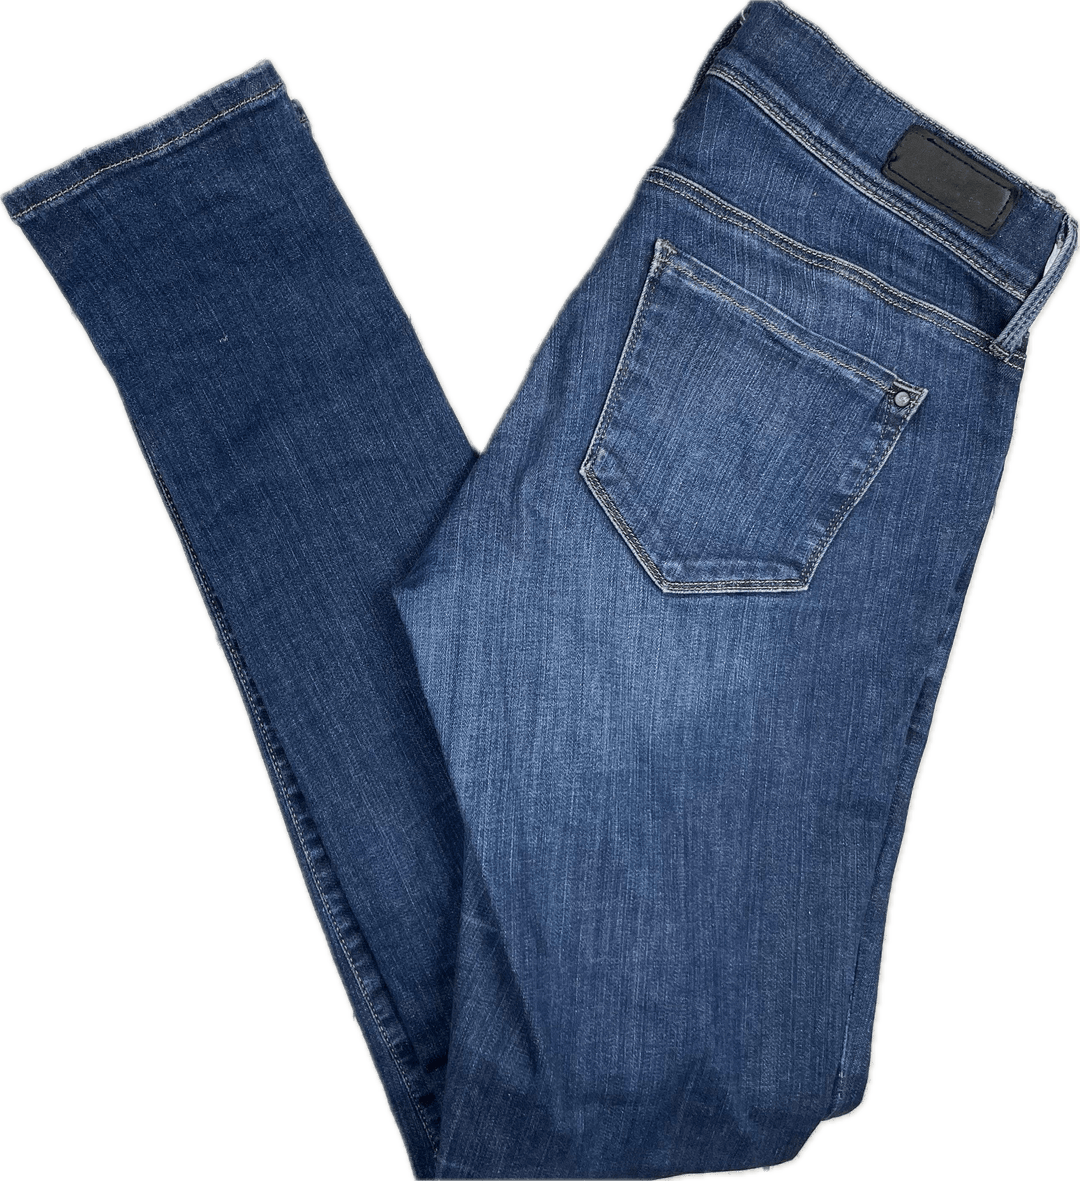 Mavi 'Reina' Maternity Stretch Skinny Jeans -Size 27/32 - Jean Pool